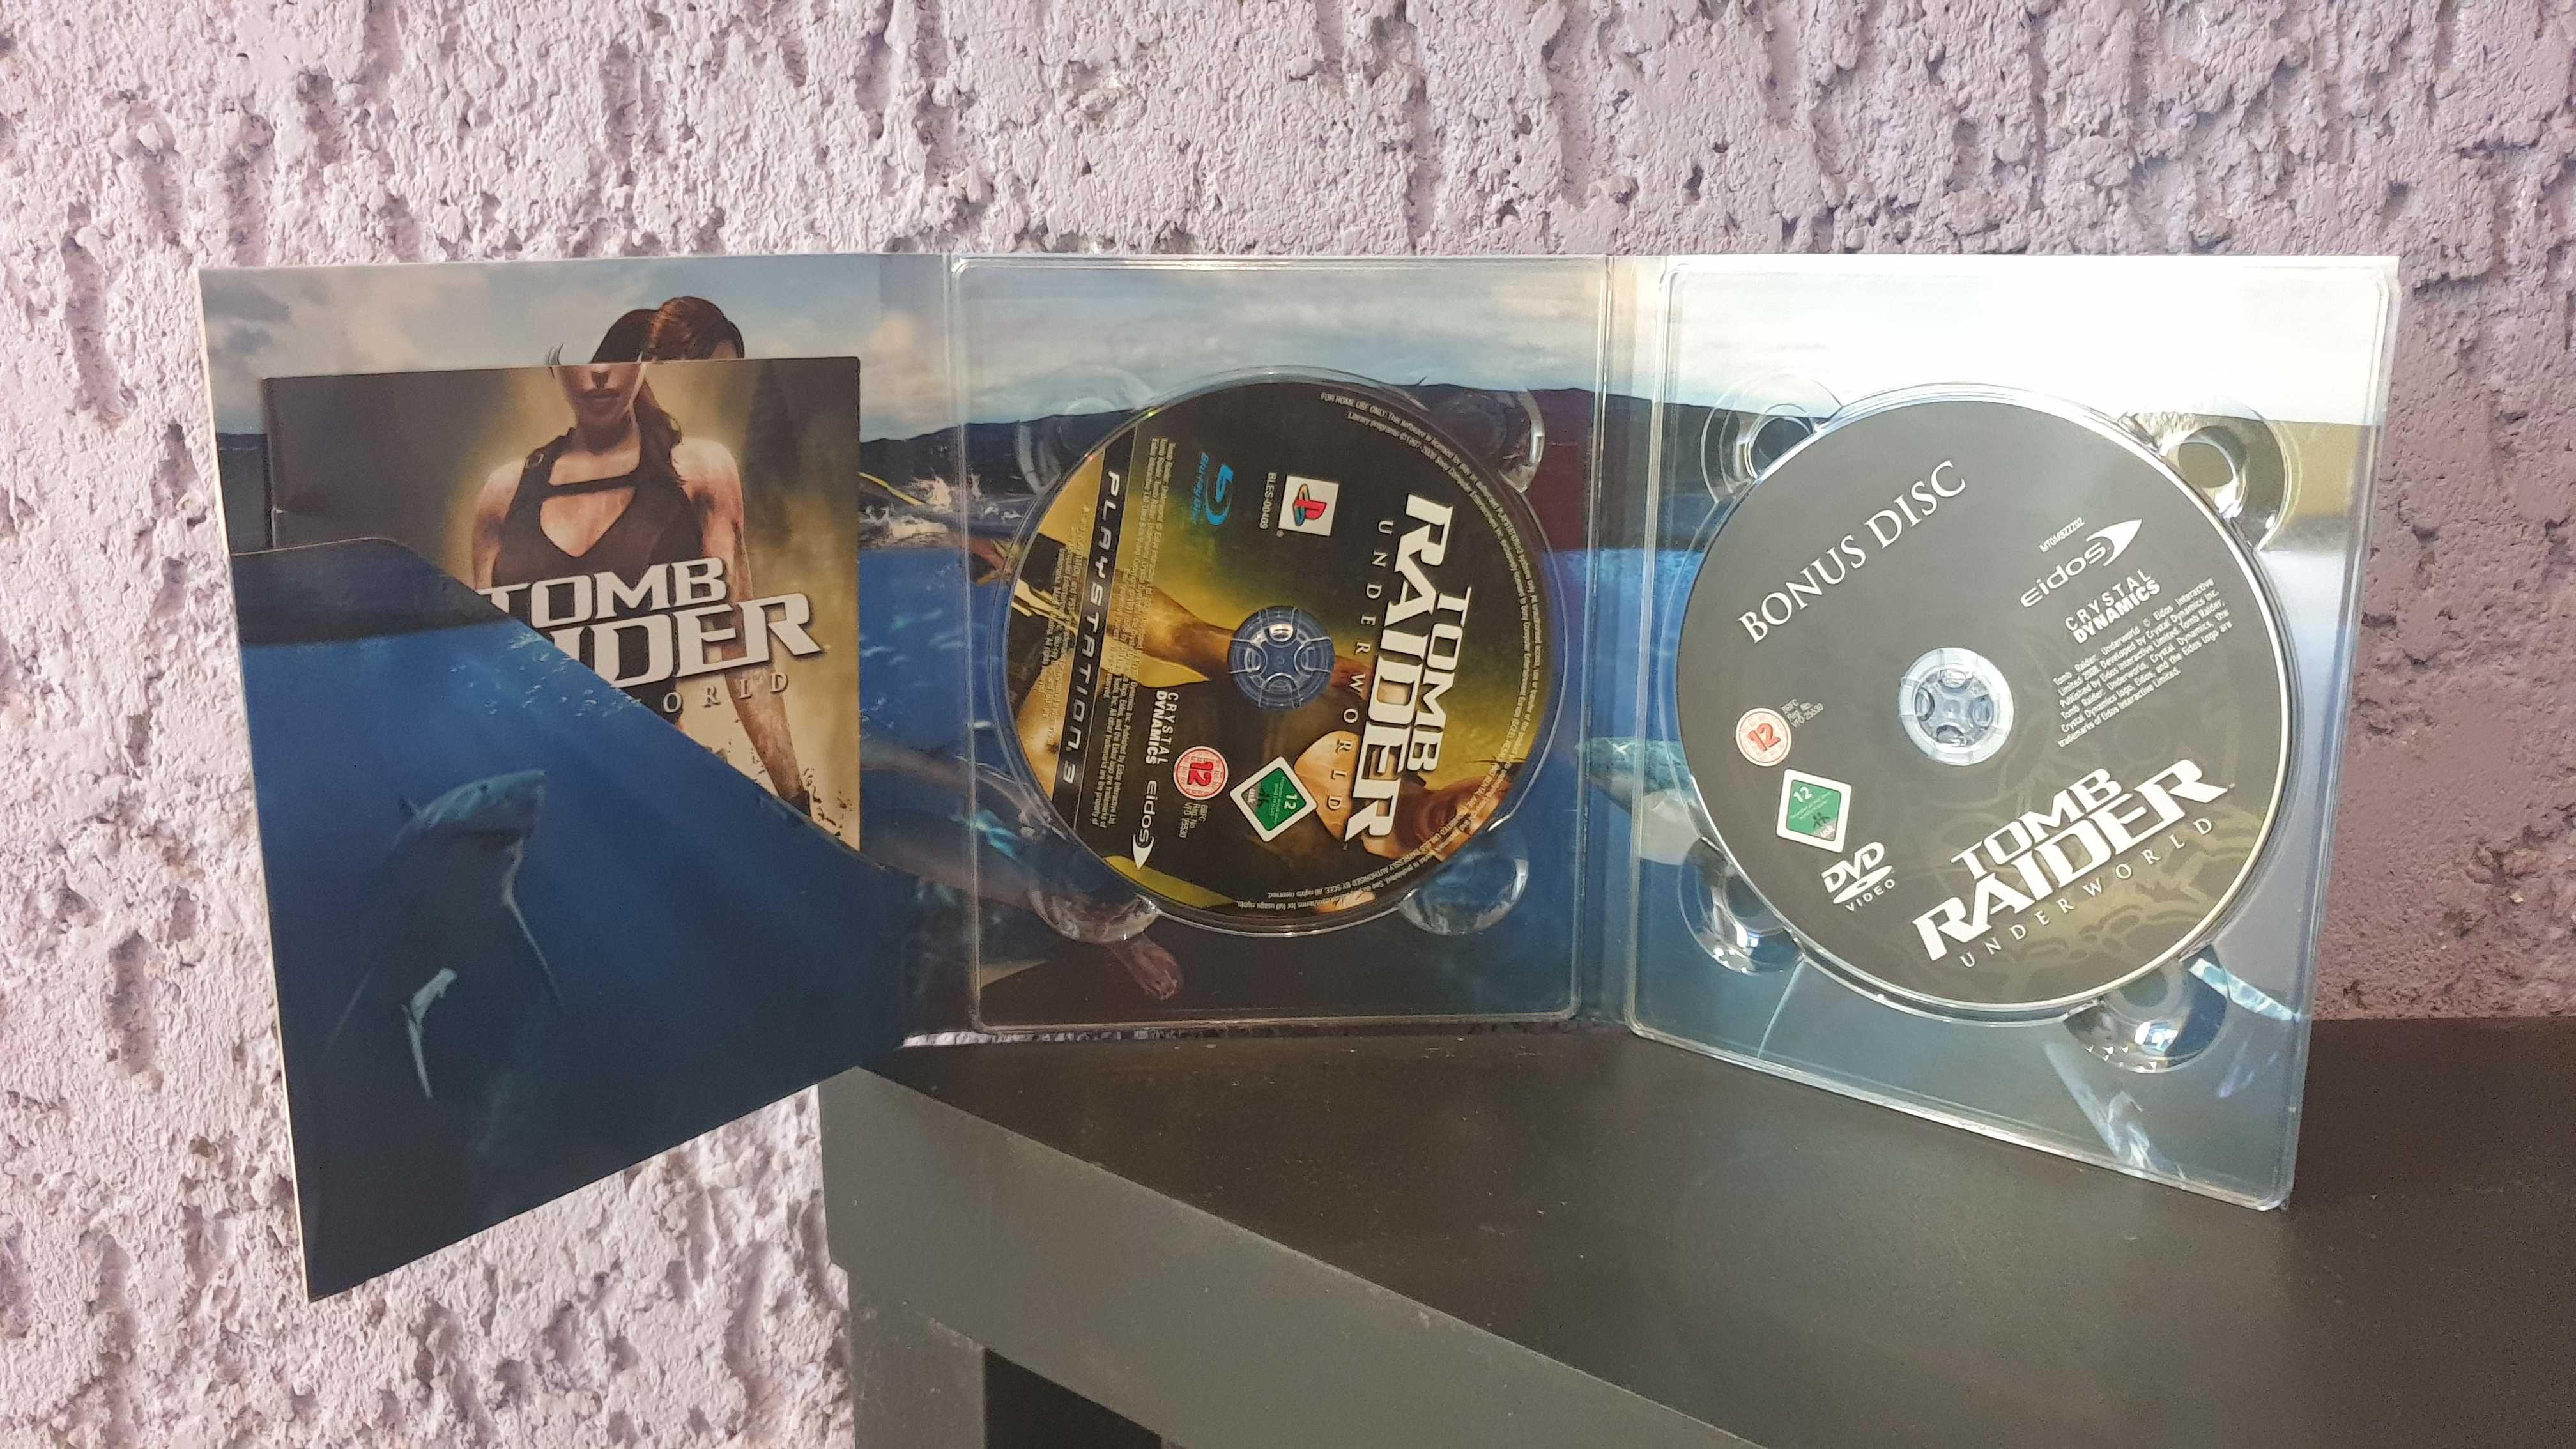 Tomb Raider Underworld Limited Edition / PS3 / PlayStation 3